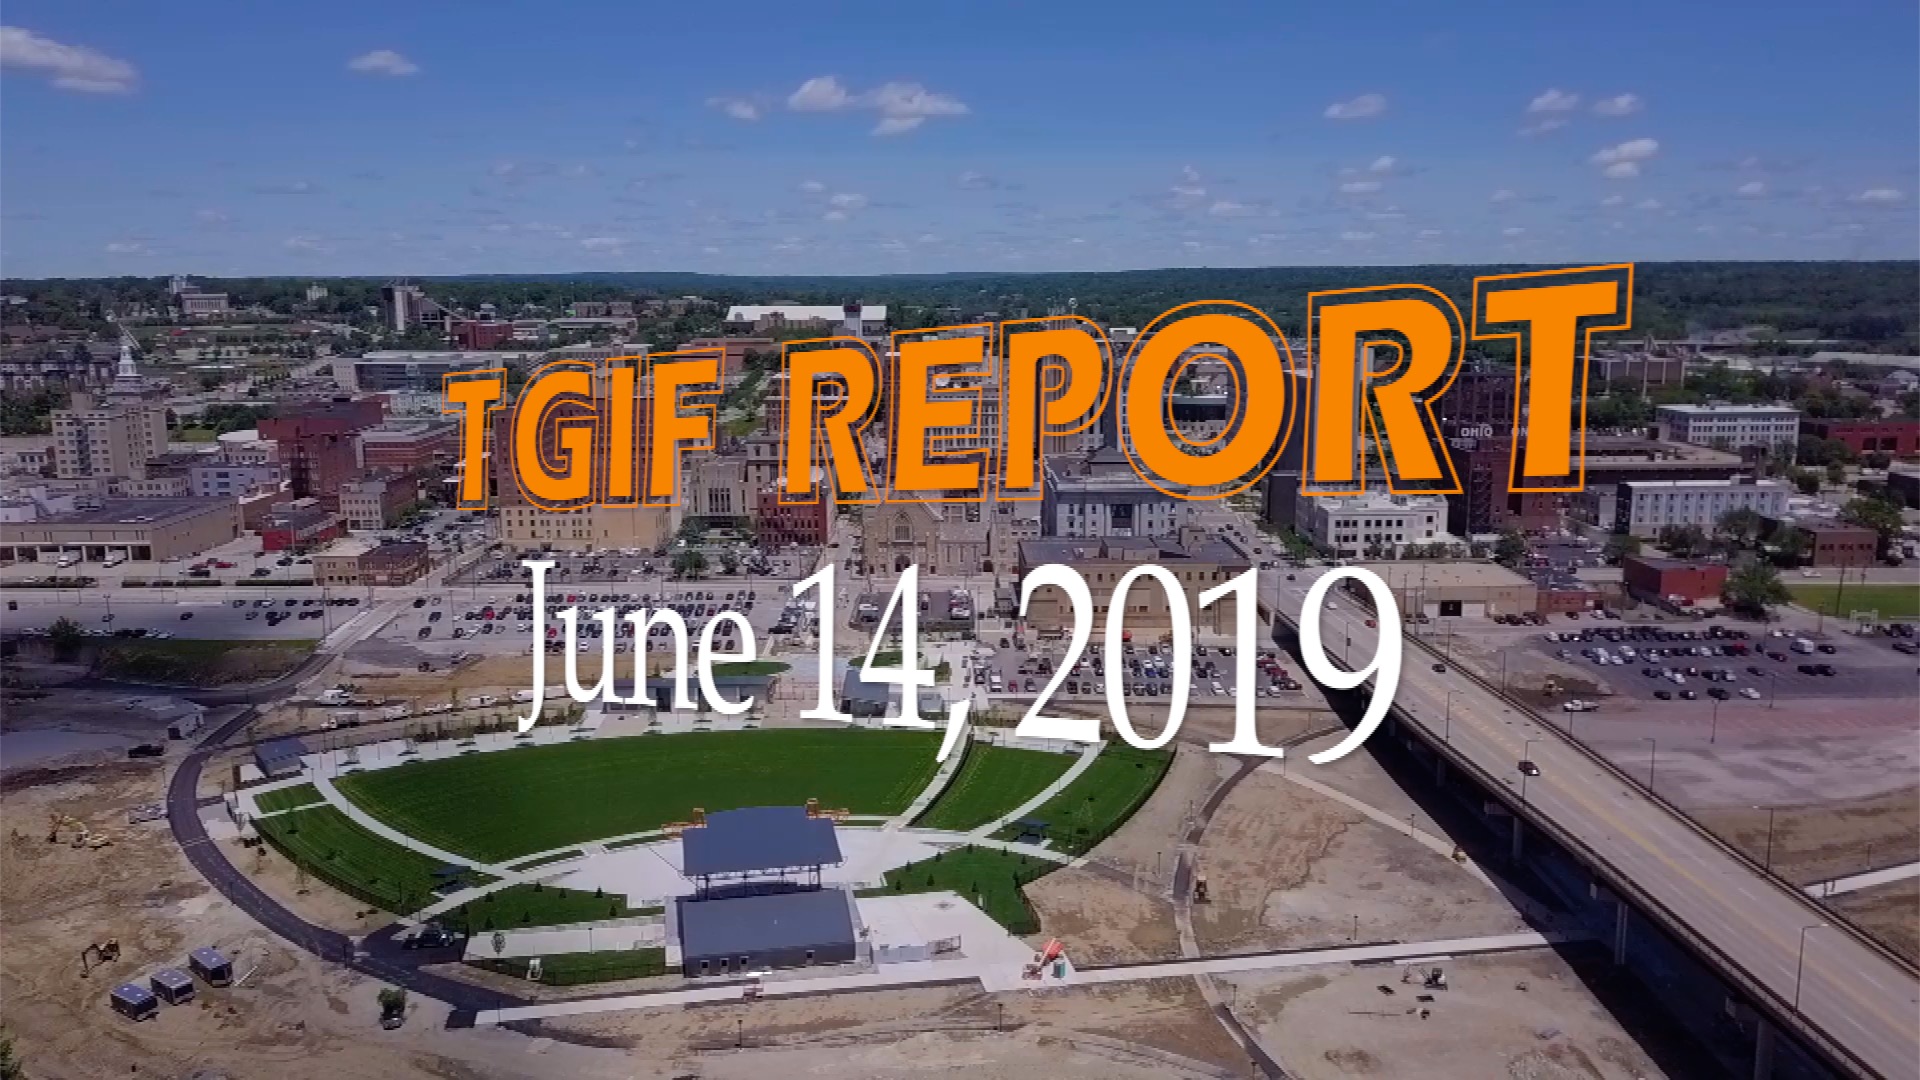 TGIF Report